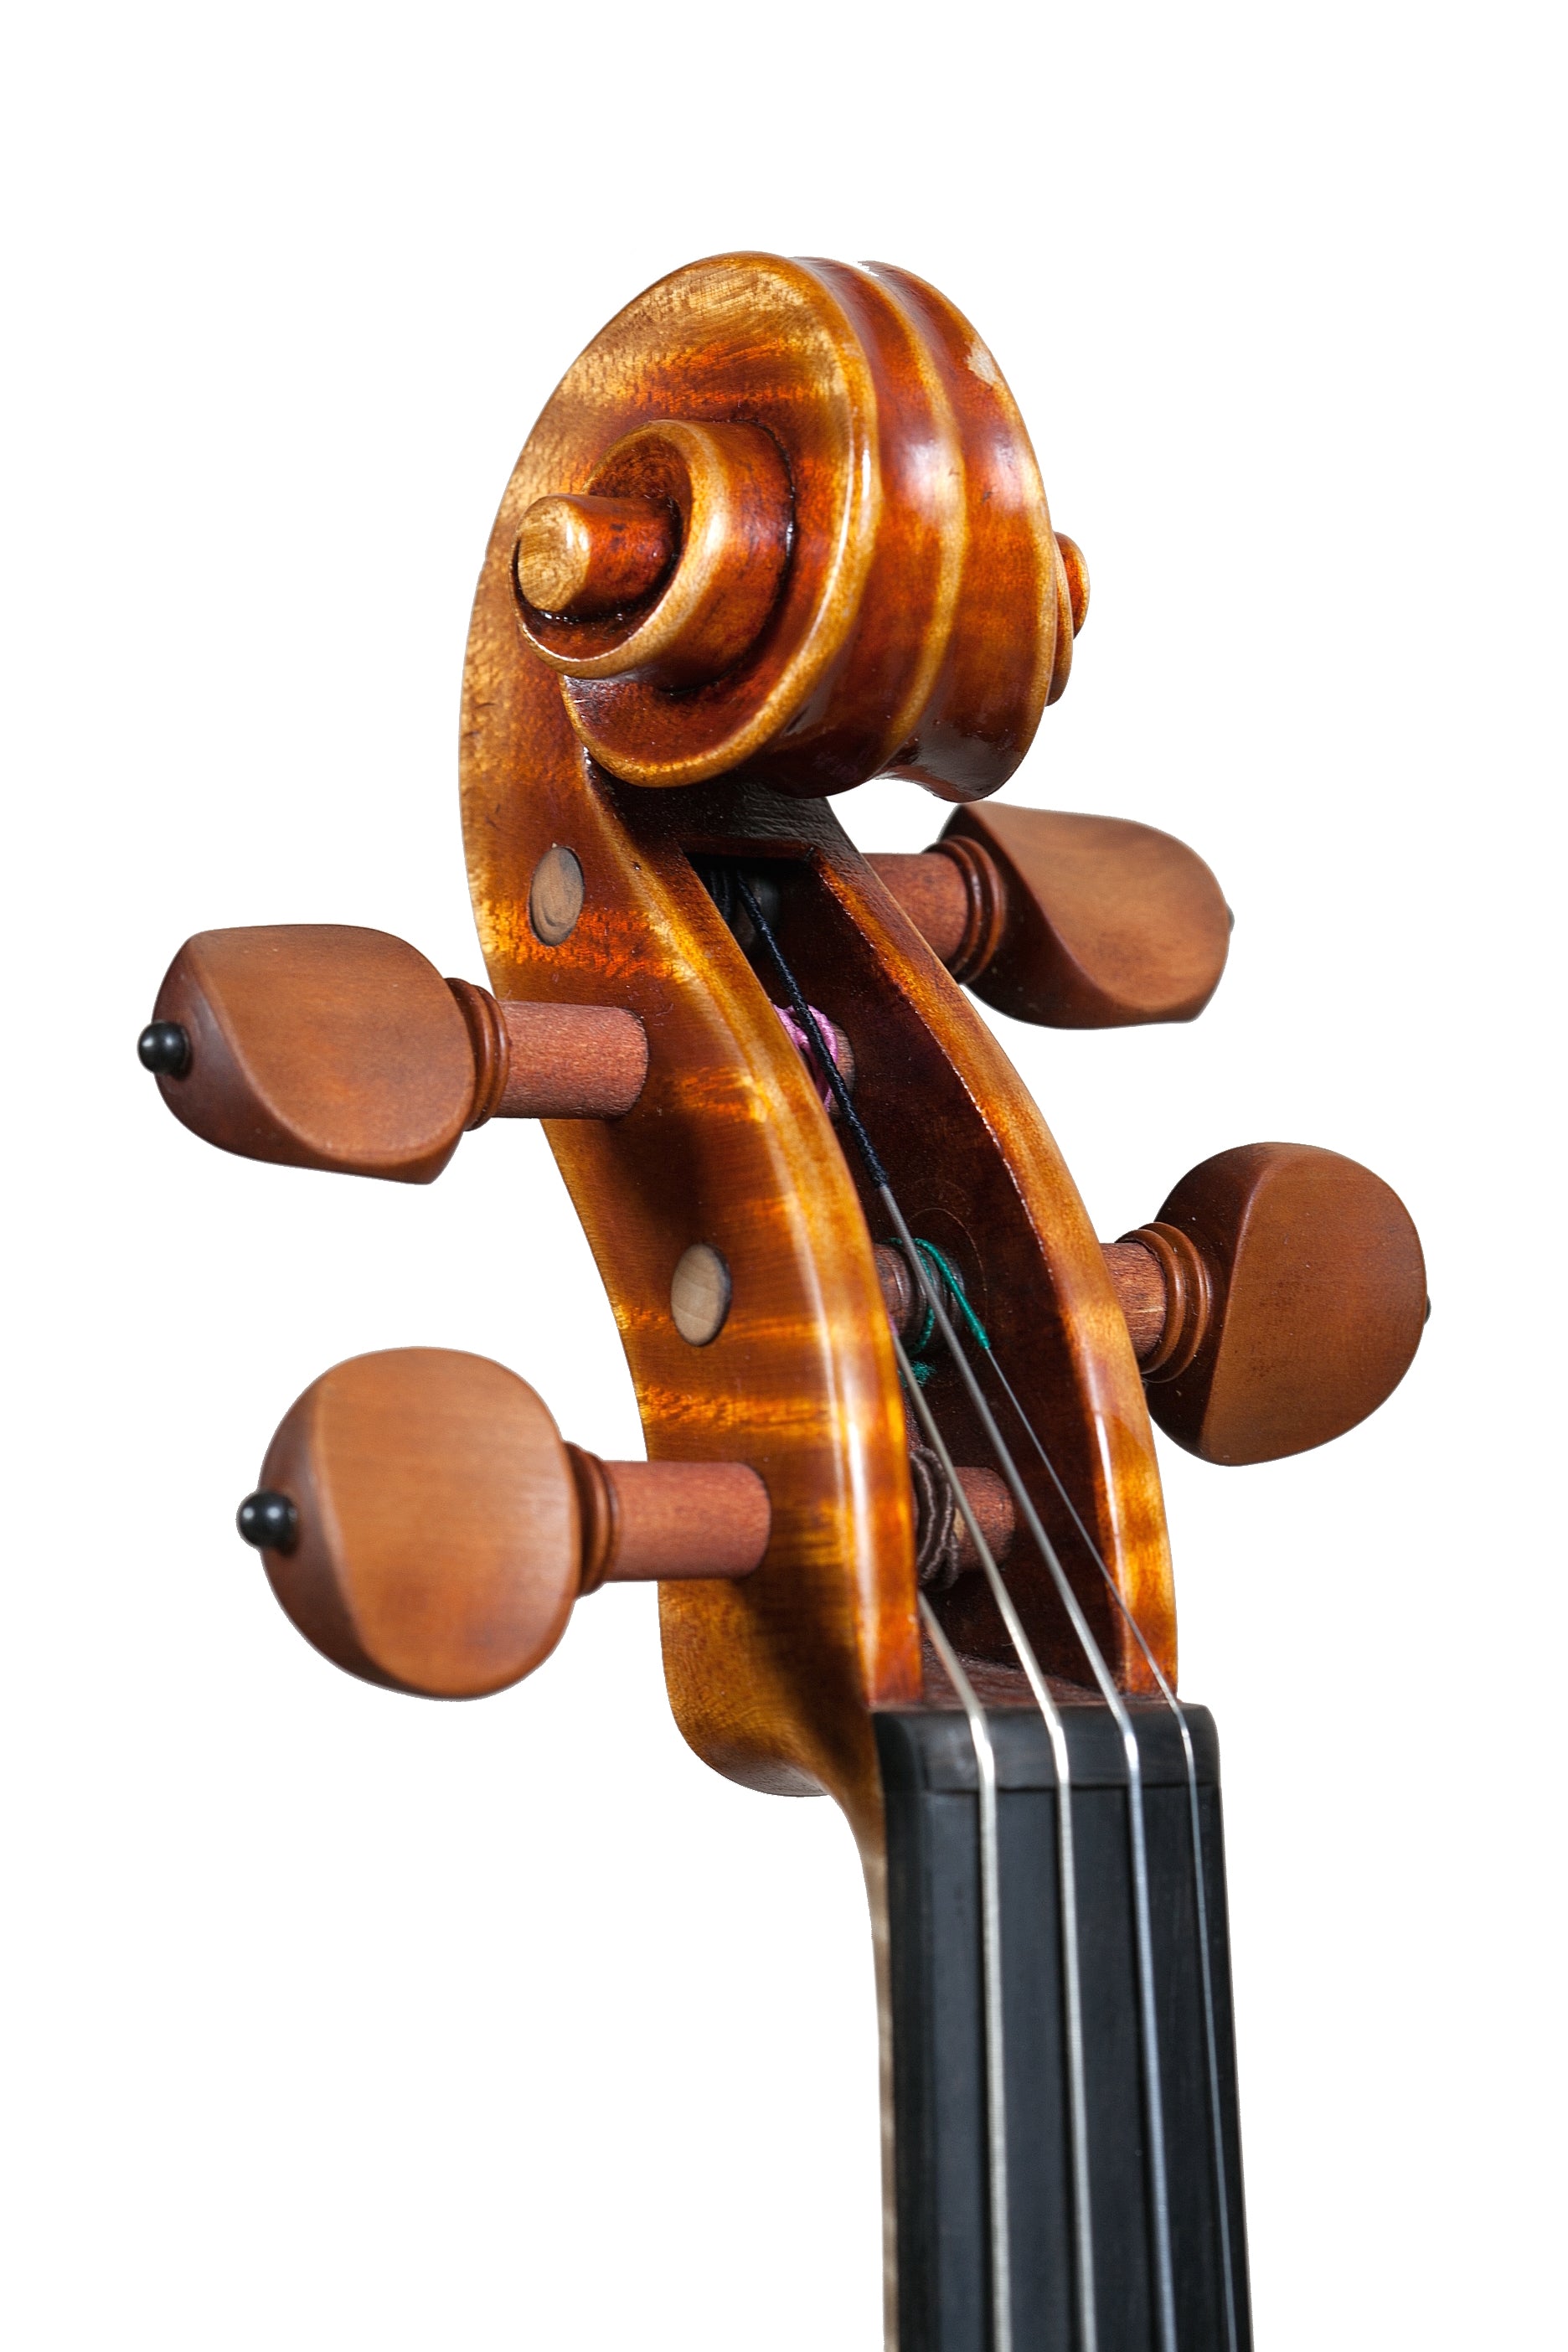 Violin - Linea Macchi, Stradivari